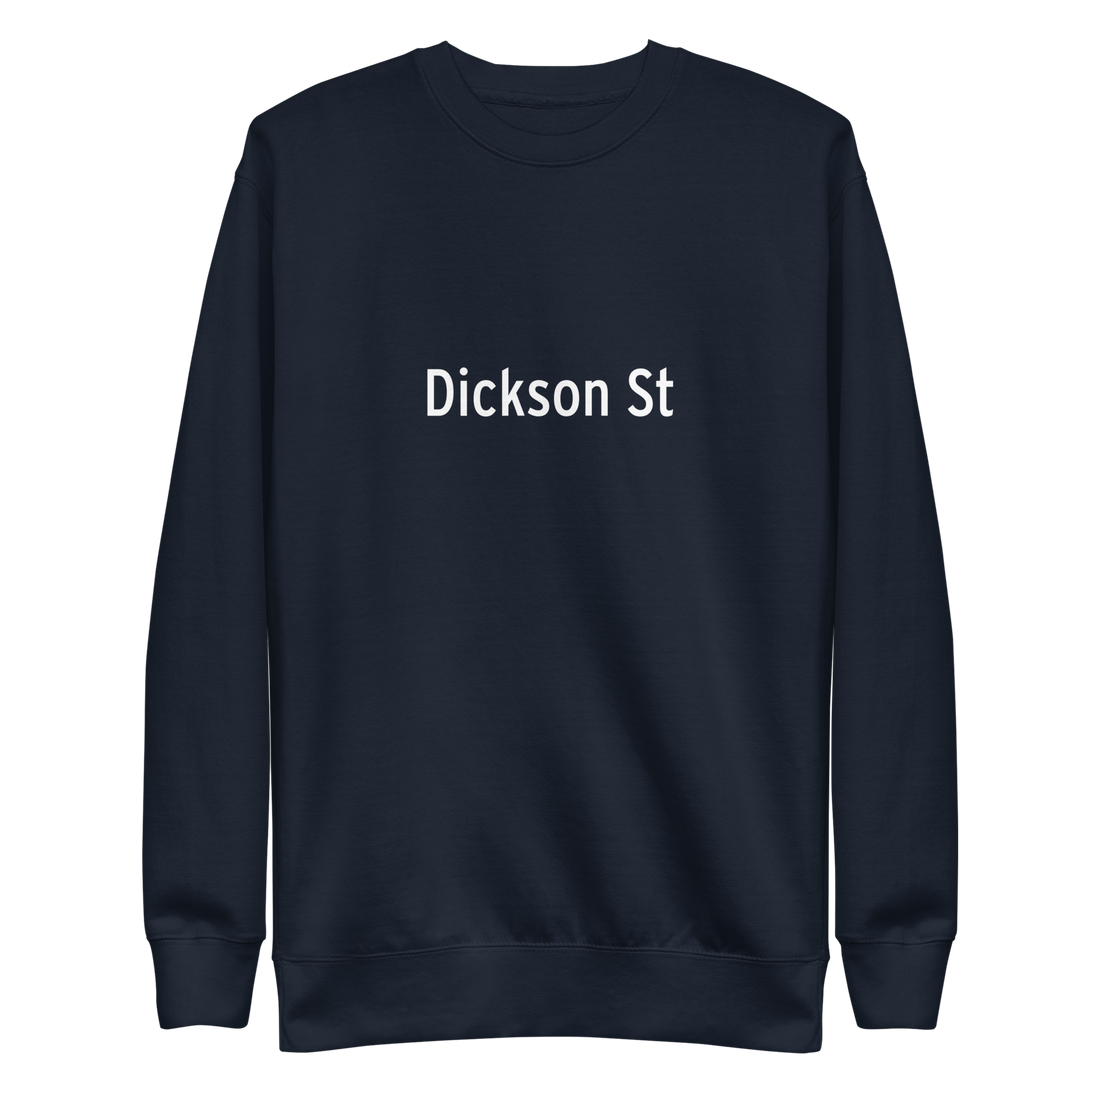 Dickson St Unisex Premium Sweatshirt